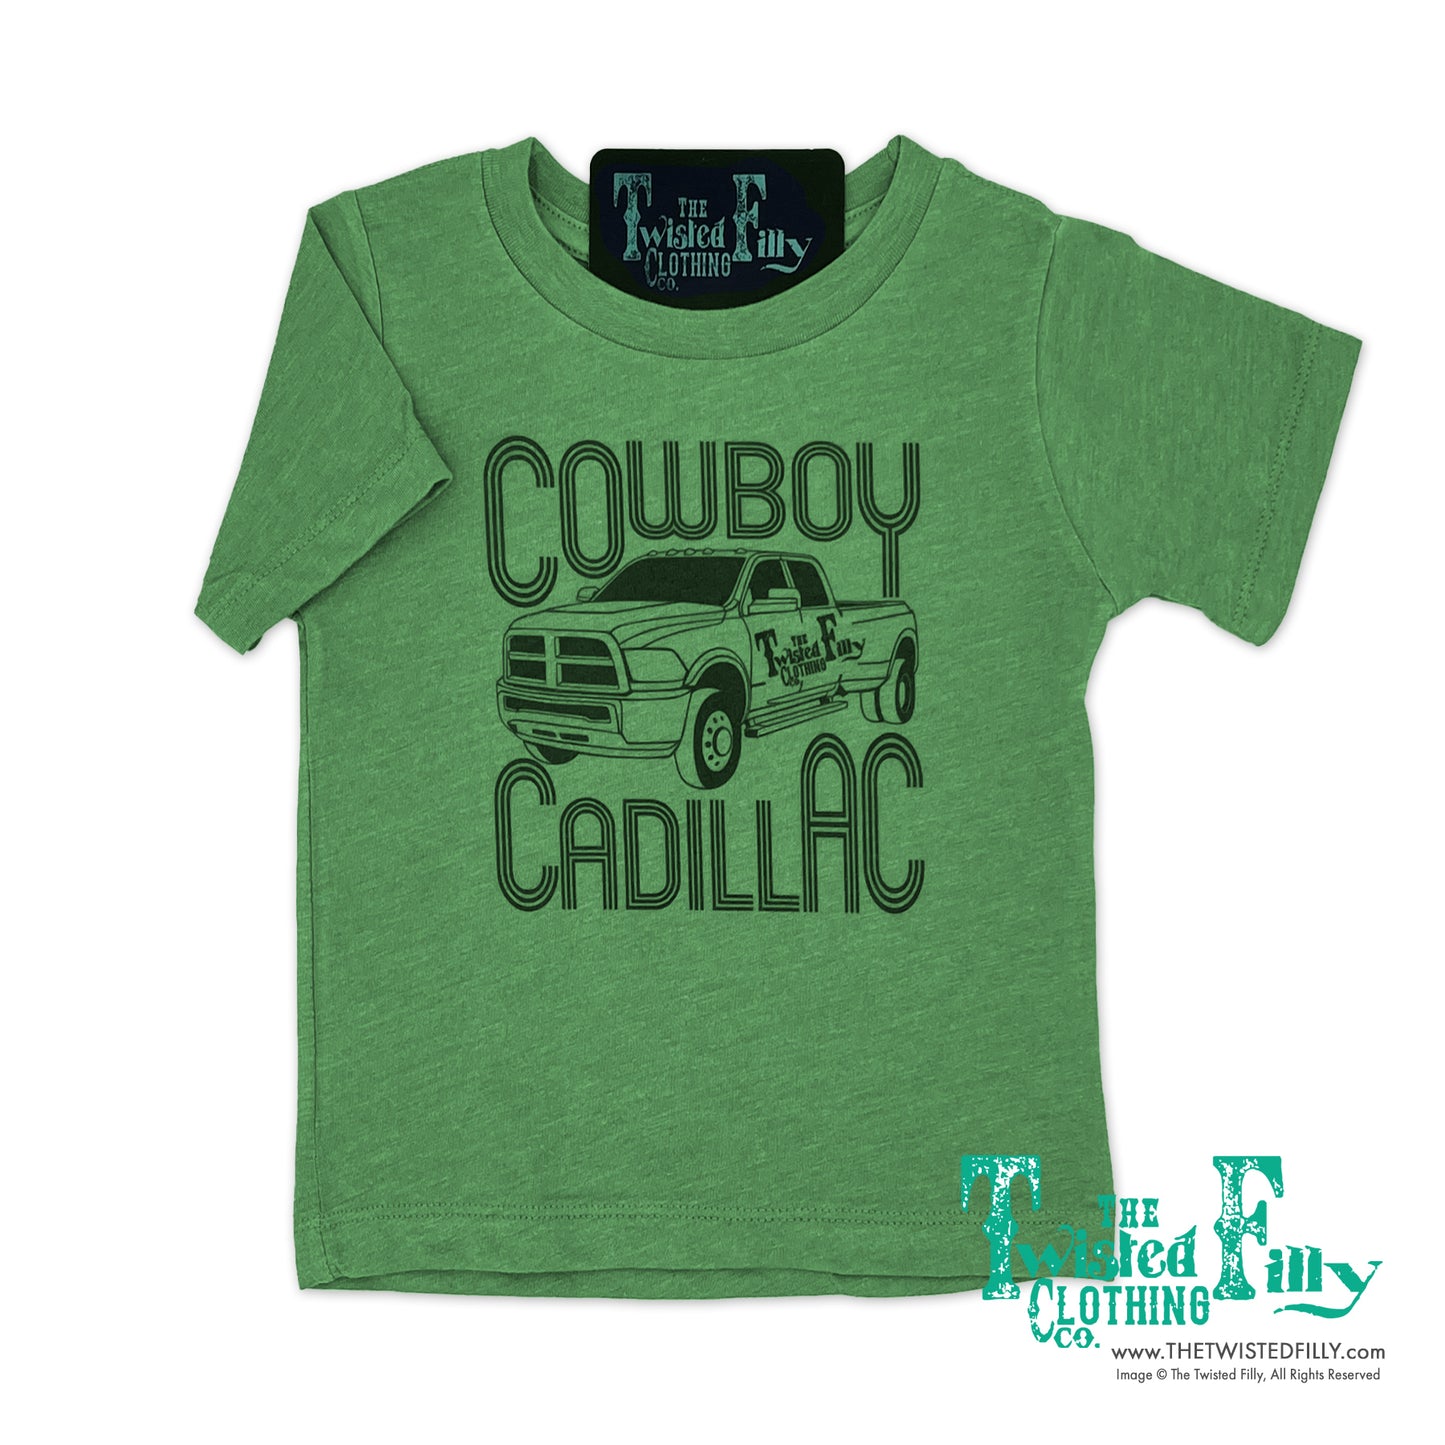 Cowboy Cadillac - S/S Toddler Tee - Green